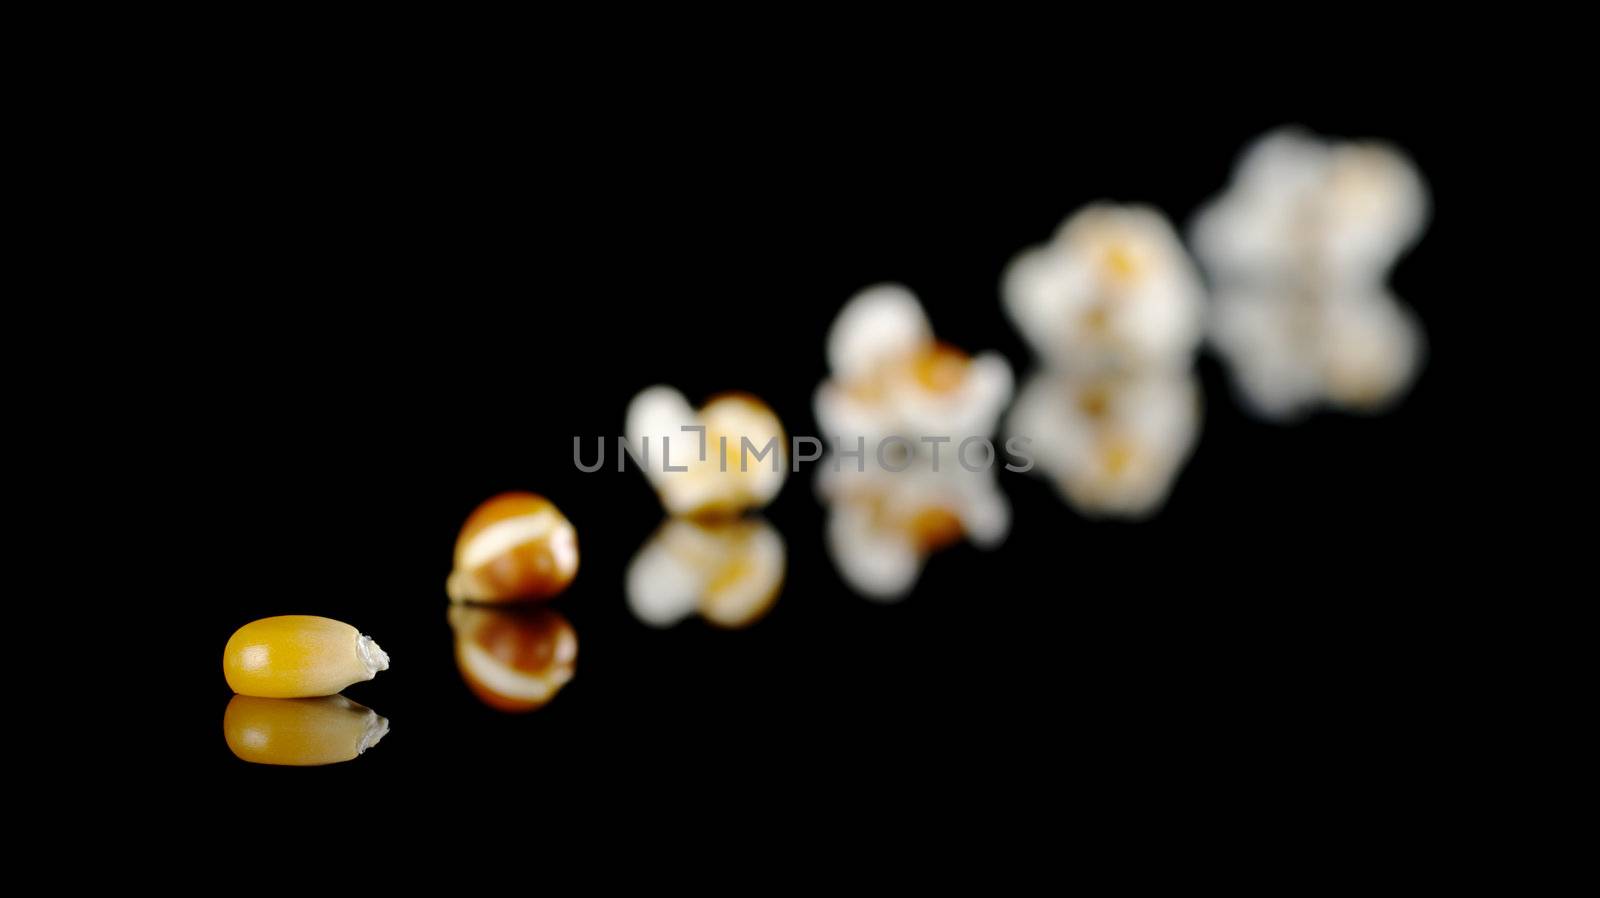 The Evolution of Popcorn by ildi